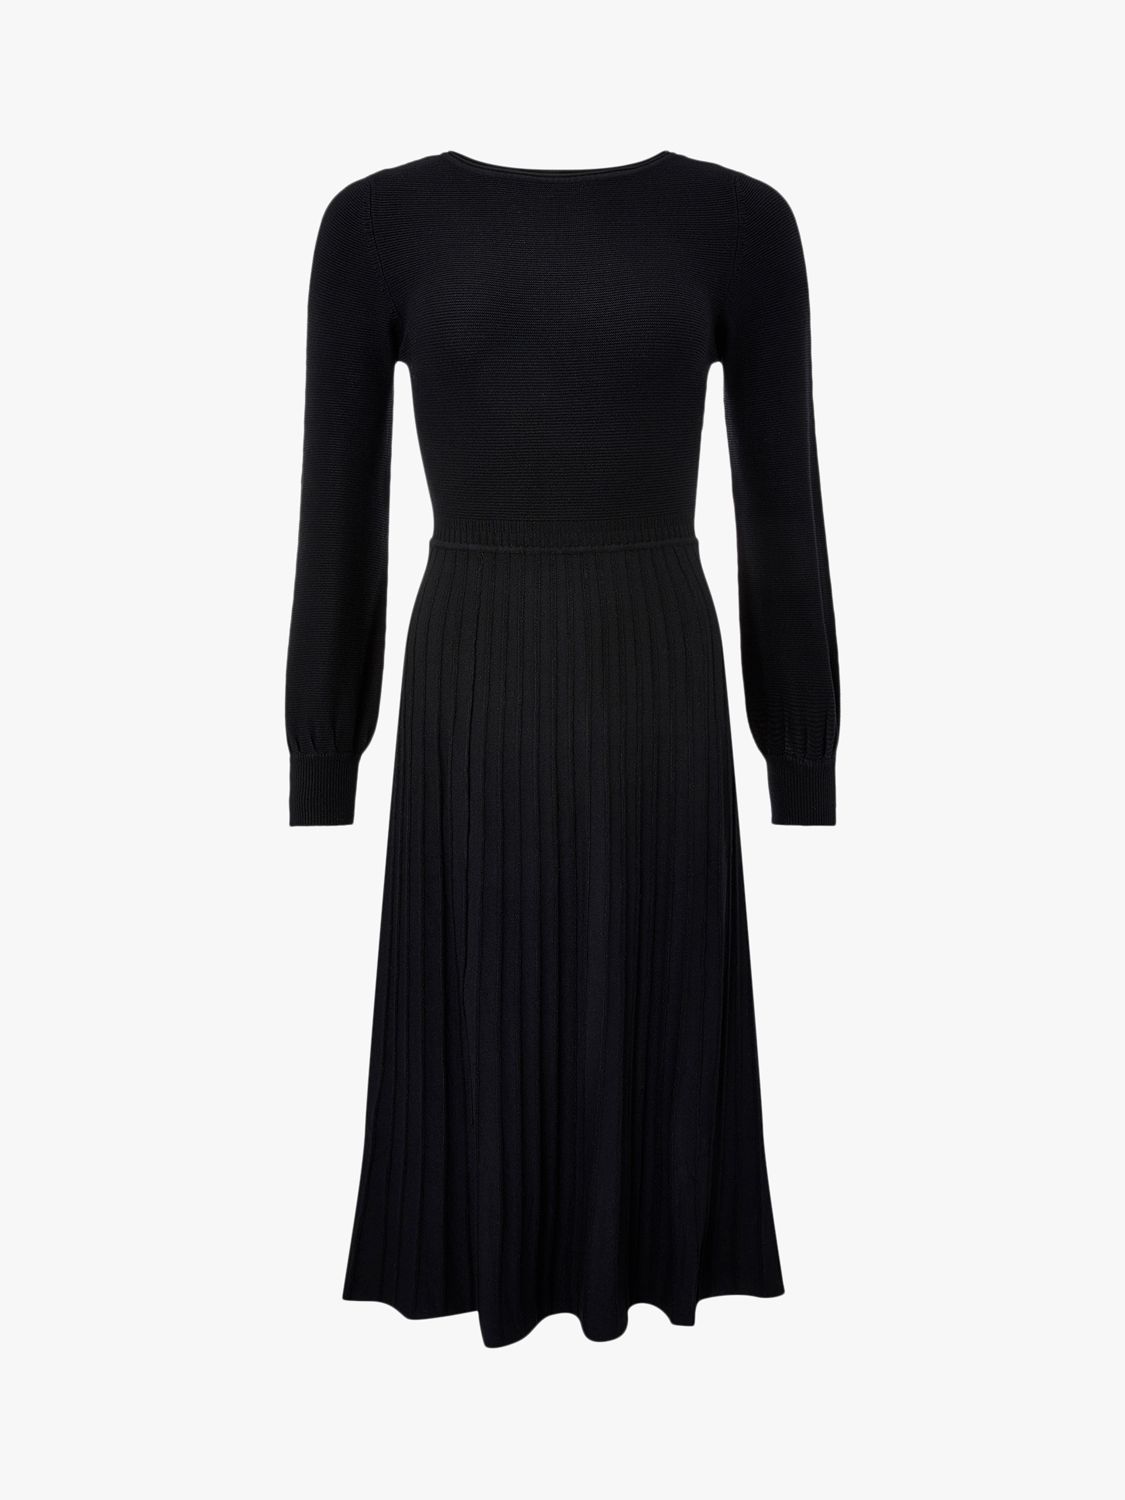 Monsoon Slash Neck Pleated Dress, Black at John Lewis & Partners